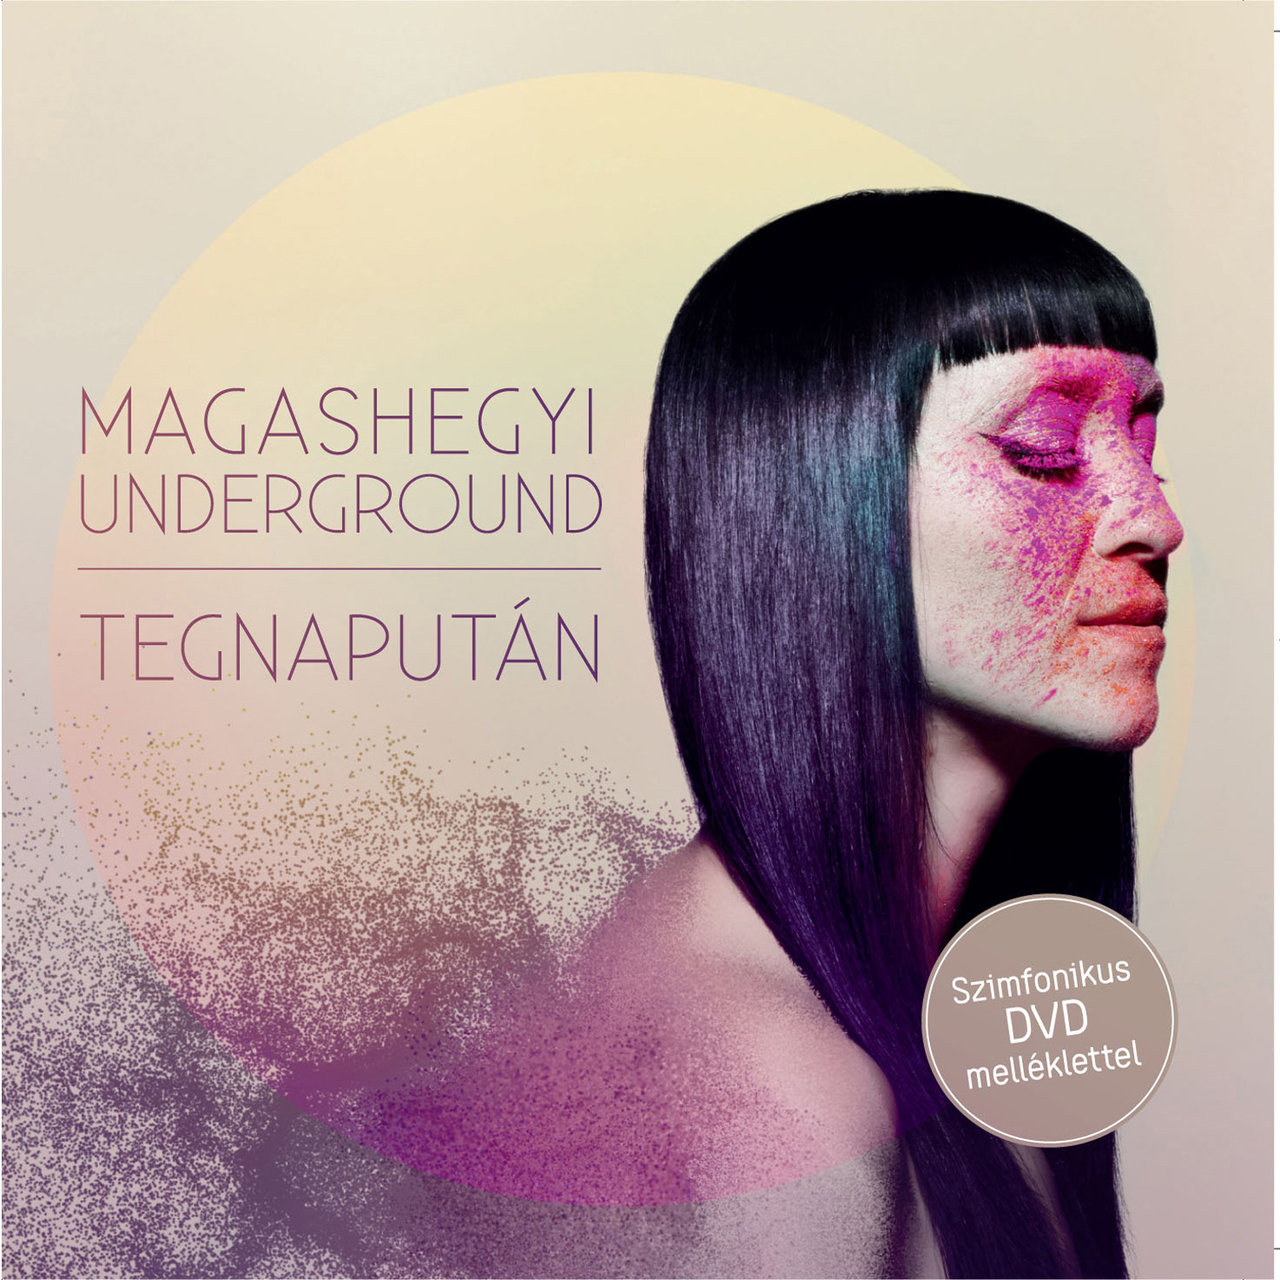 Magashegyi Underground Tegnapután cover artwork